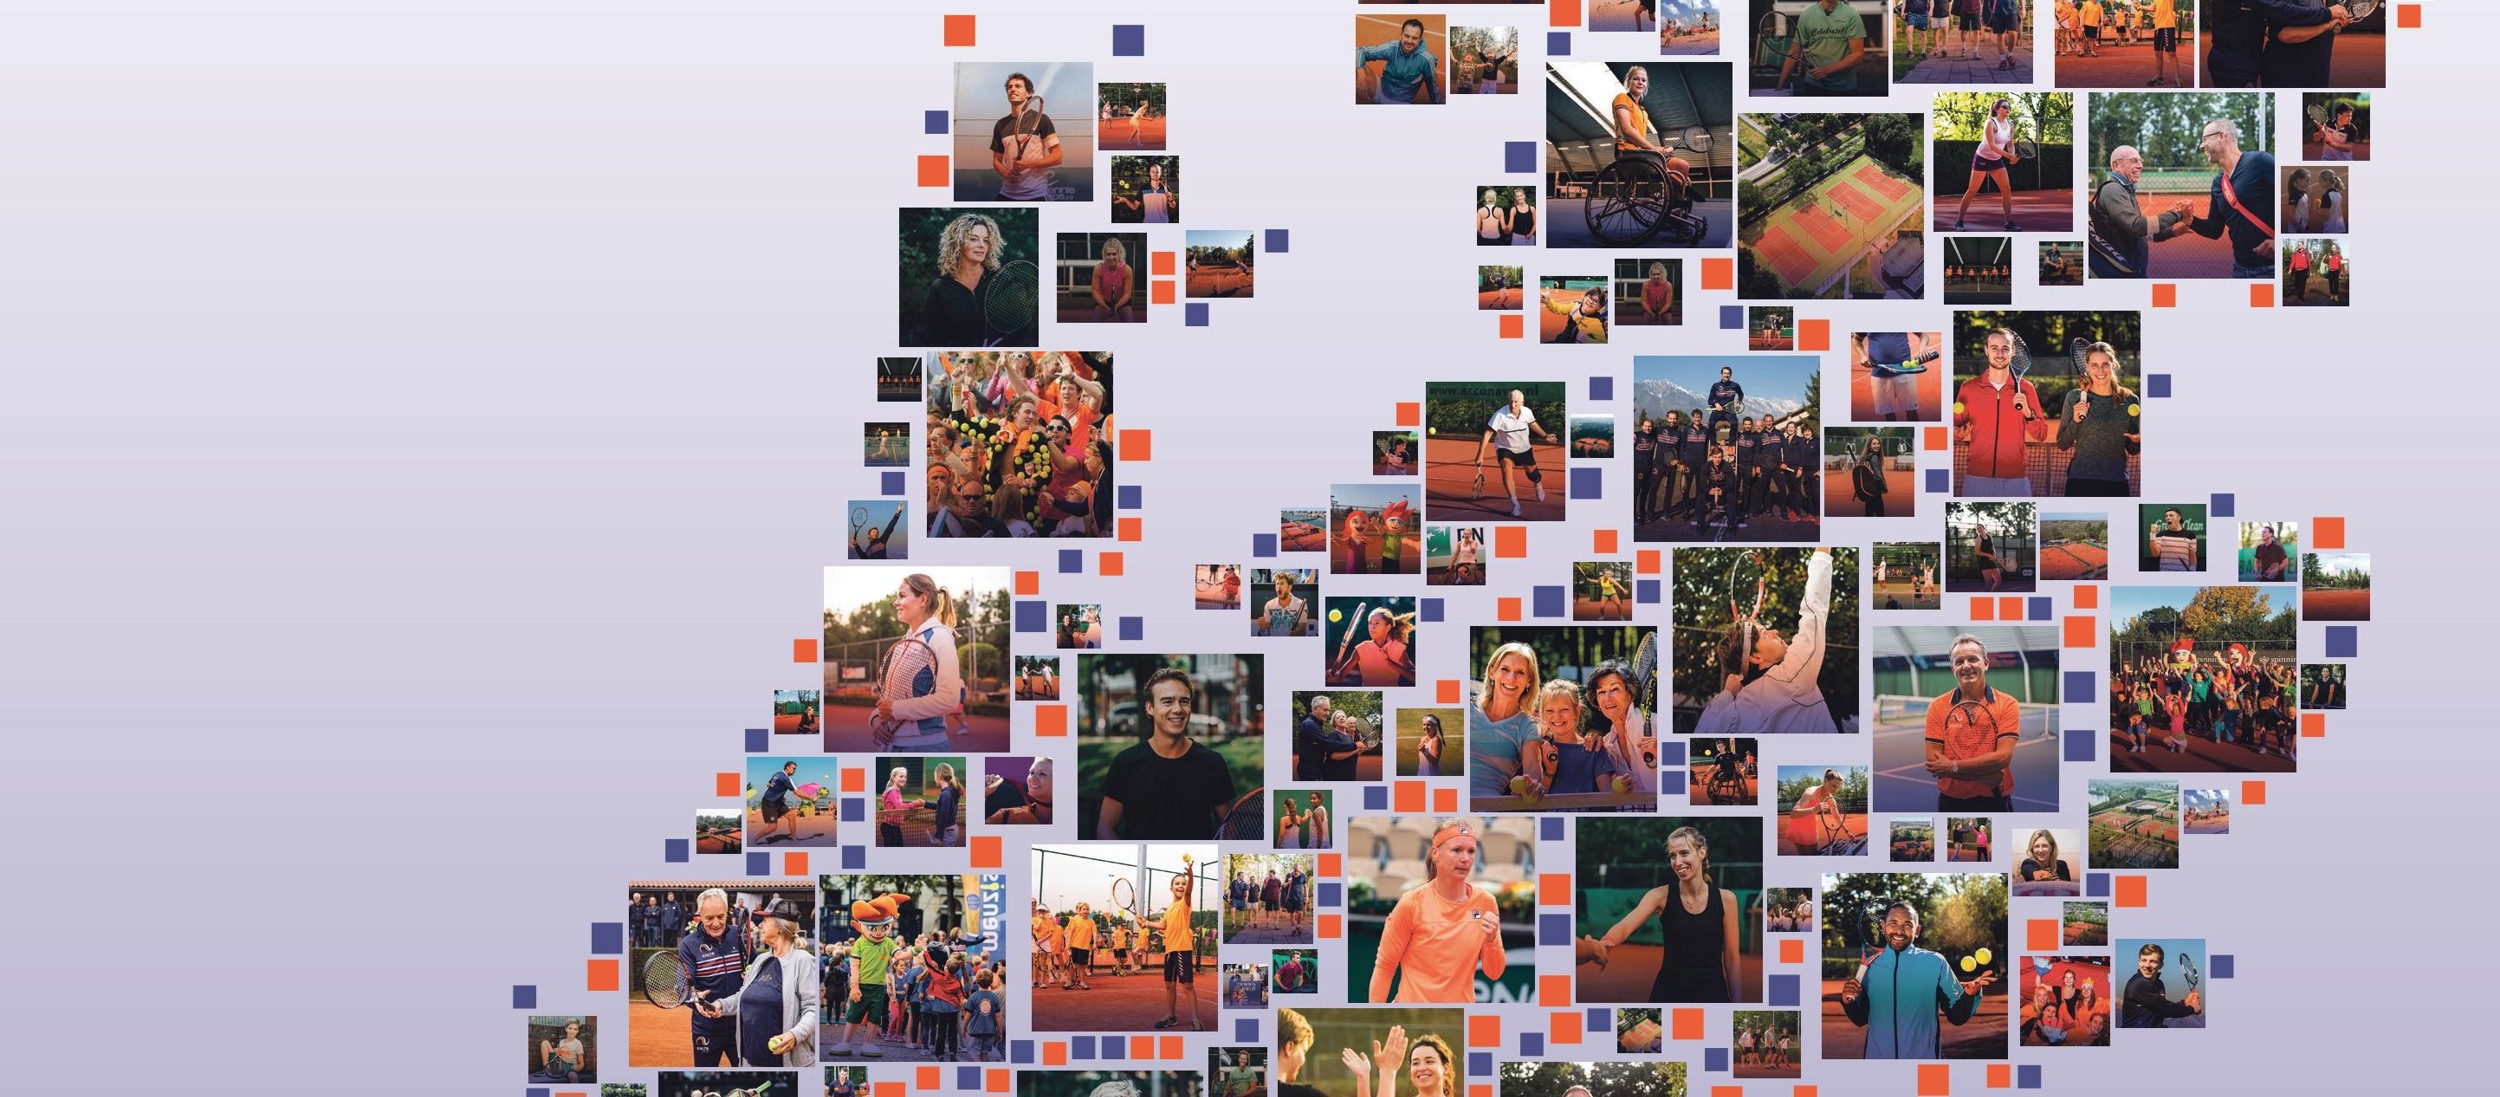 Nederland Tennisland Vrijwilligers Bedankt